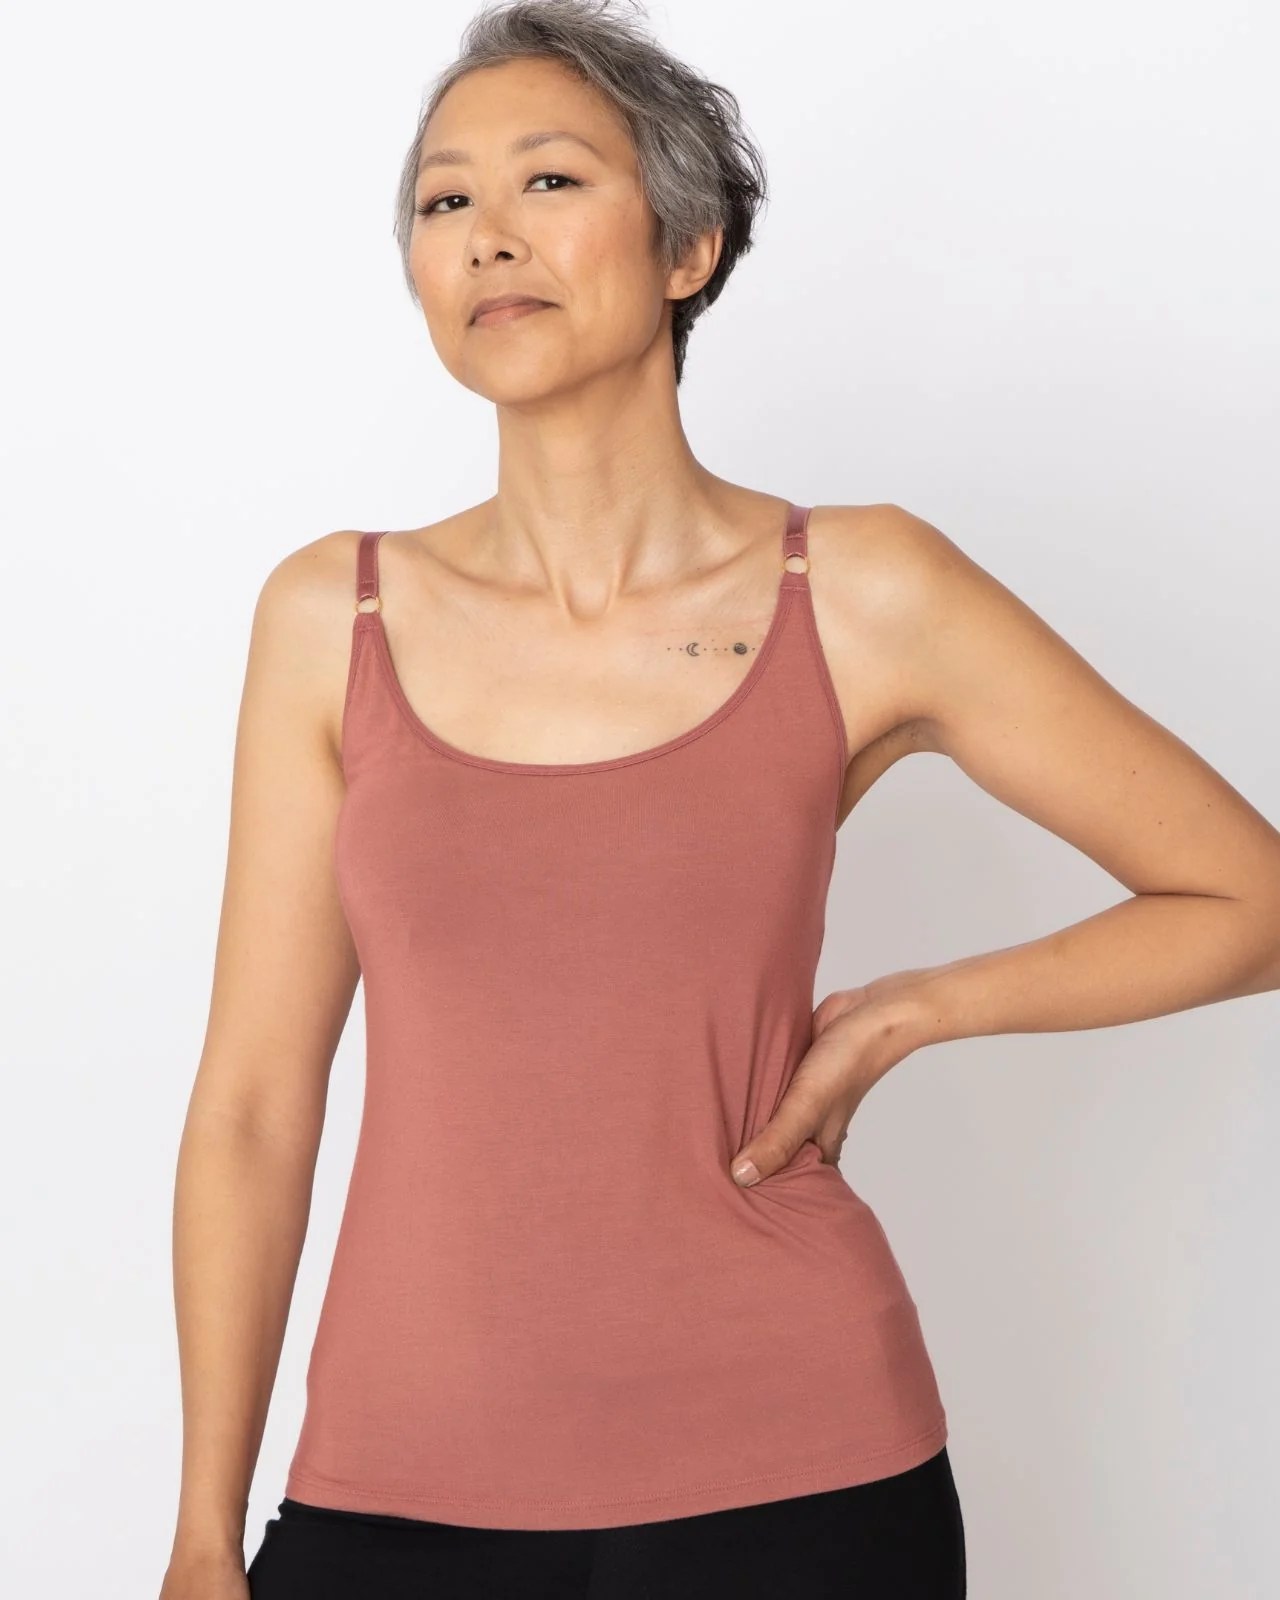 anaono modal mastectomy camisole